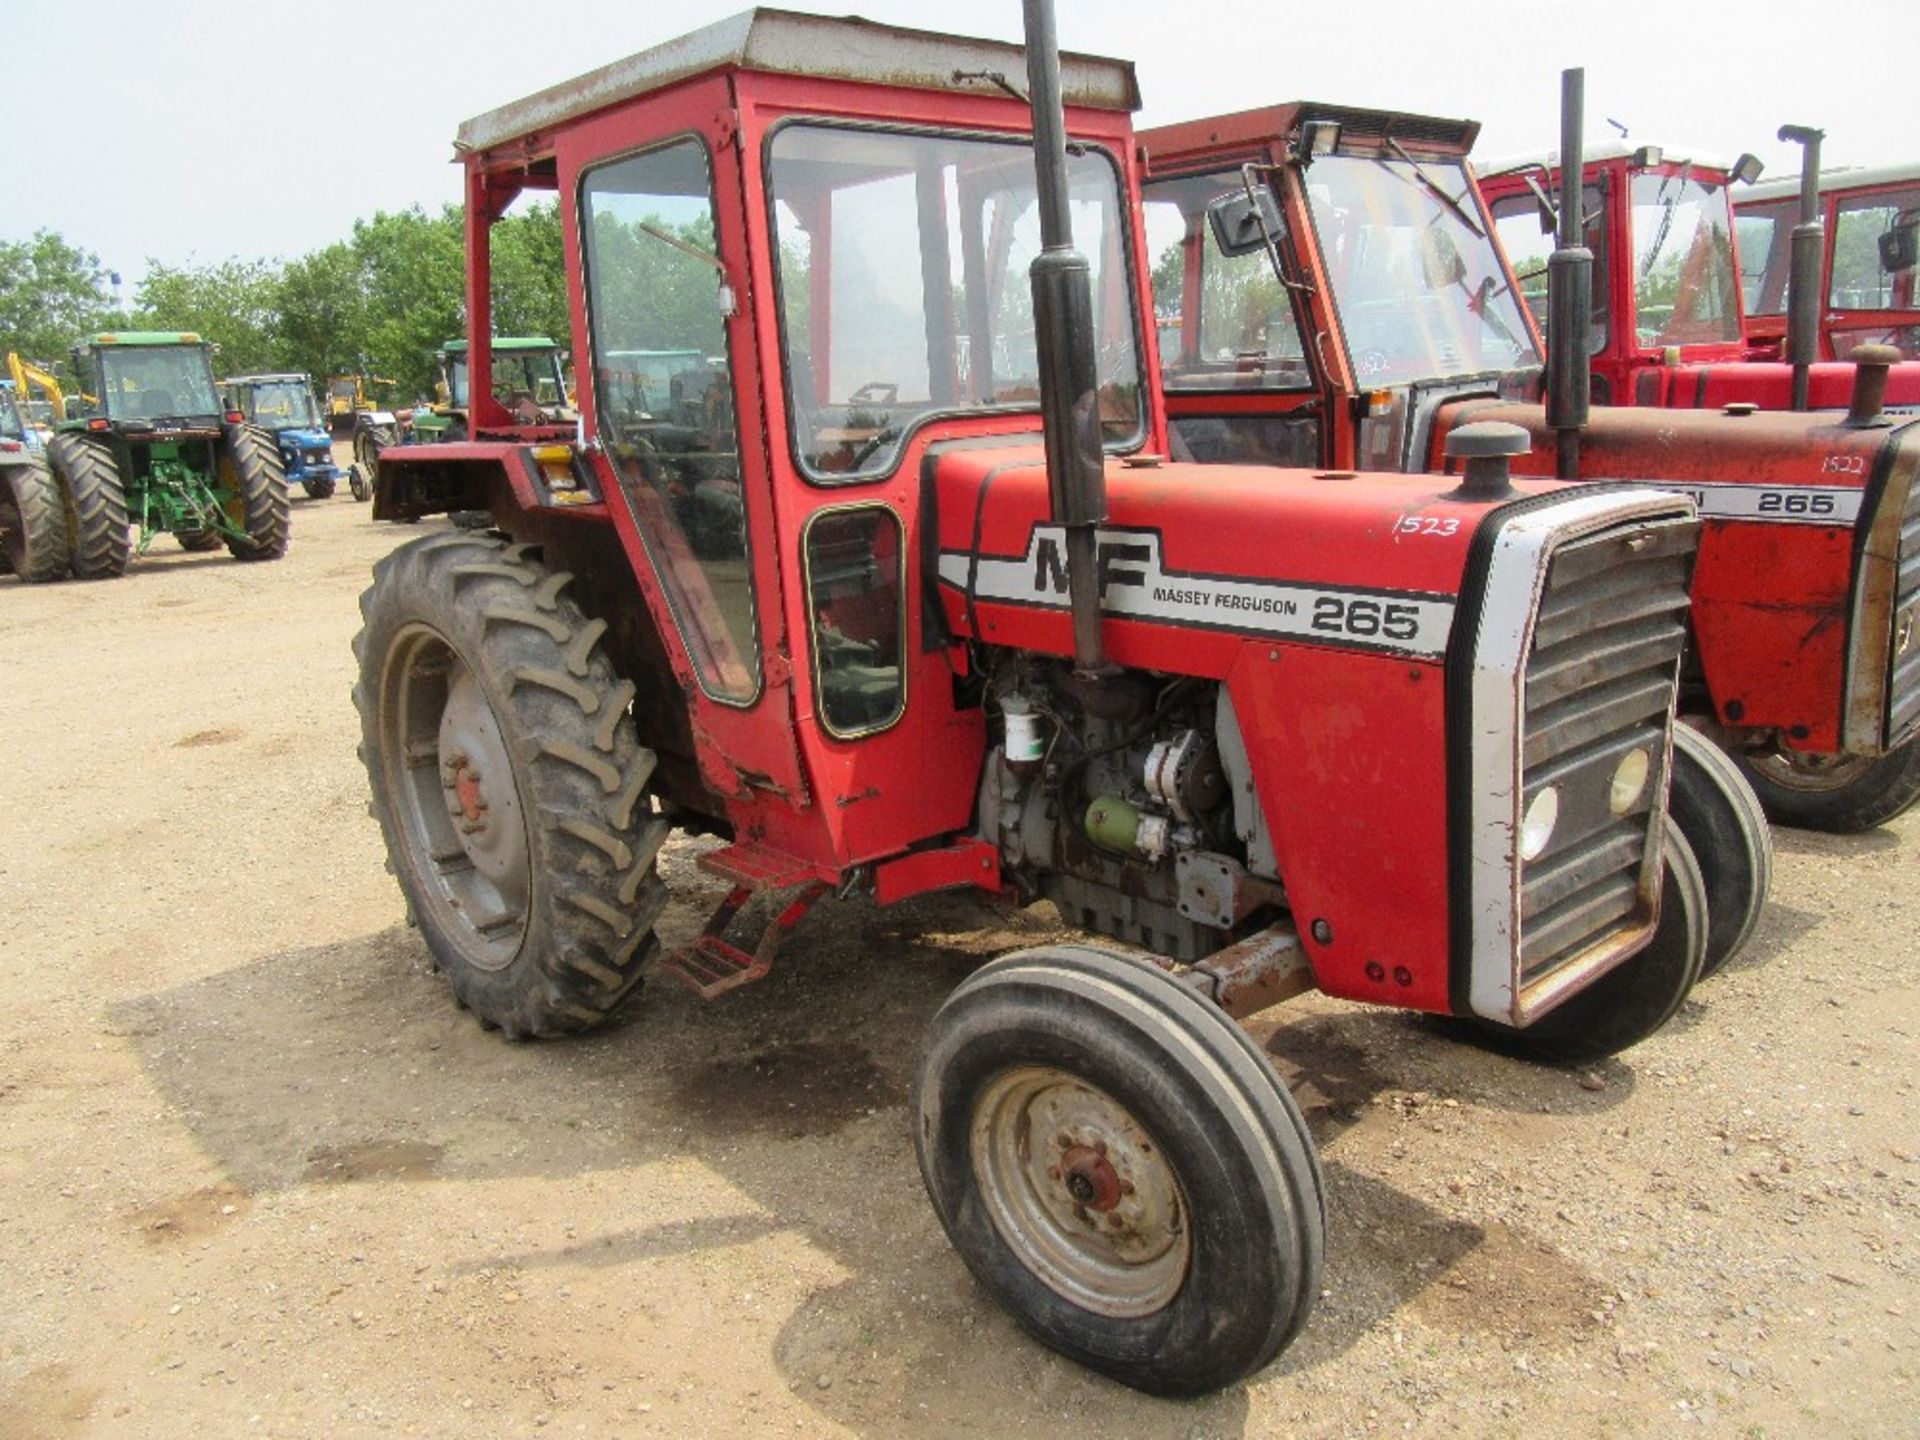 Massey Ferguson 265 Tractor - Image 4 of 5